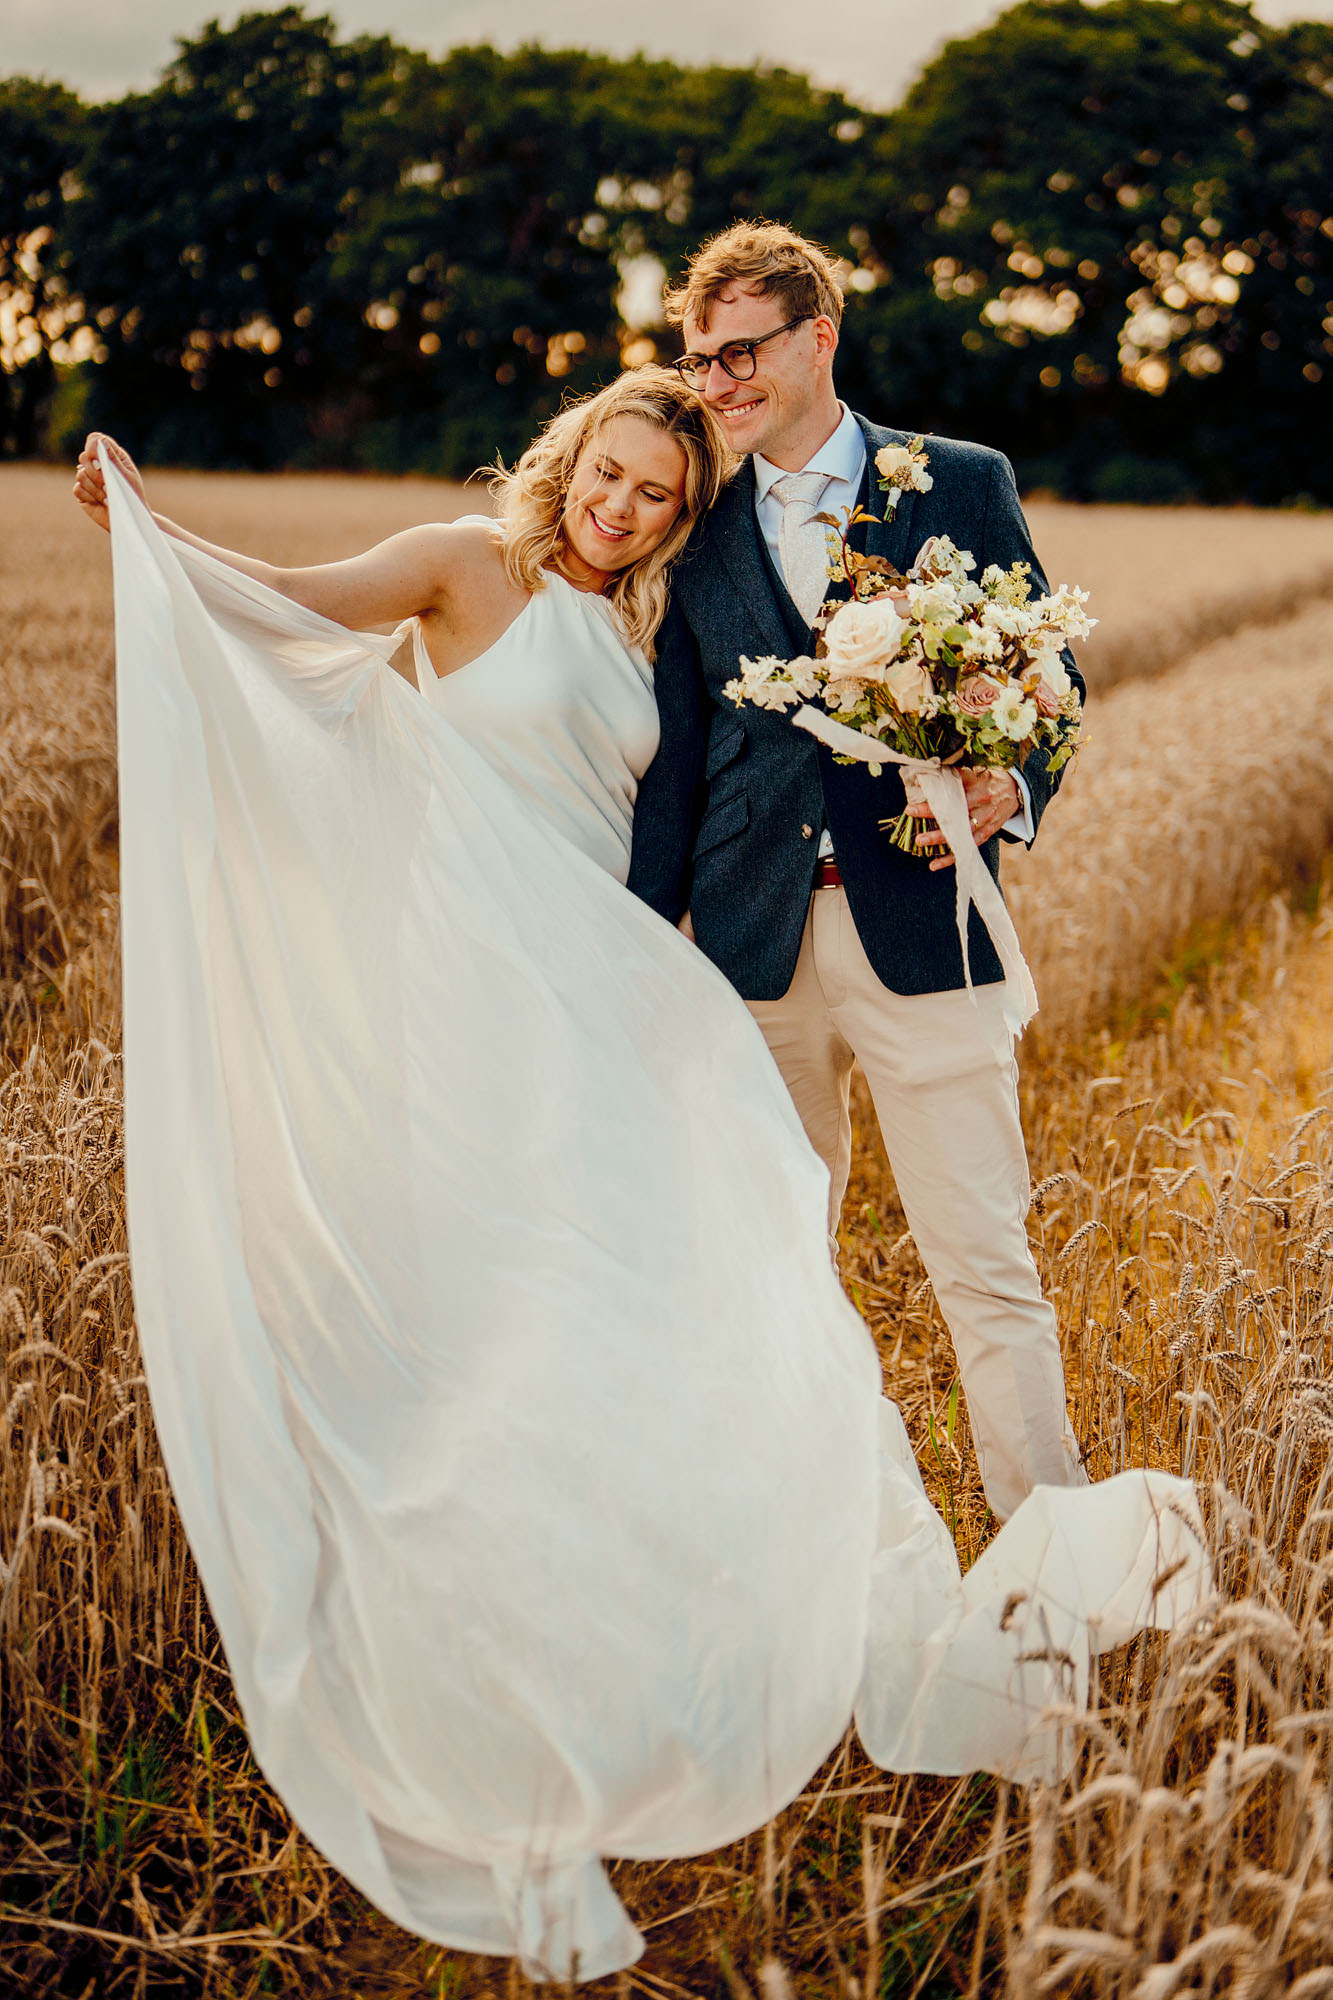 Sand Hutton wedding photography hamish irvine